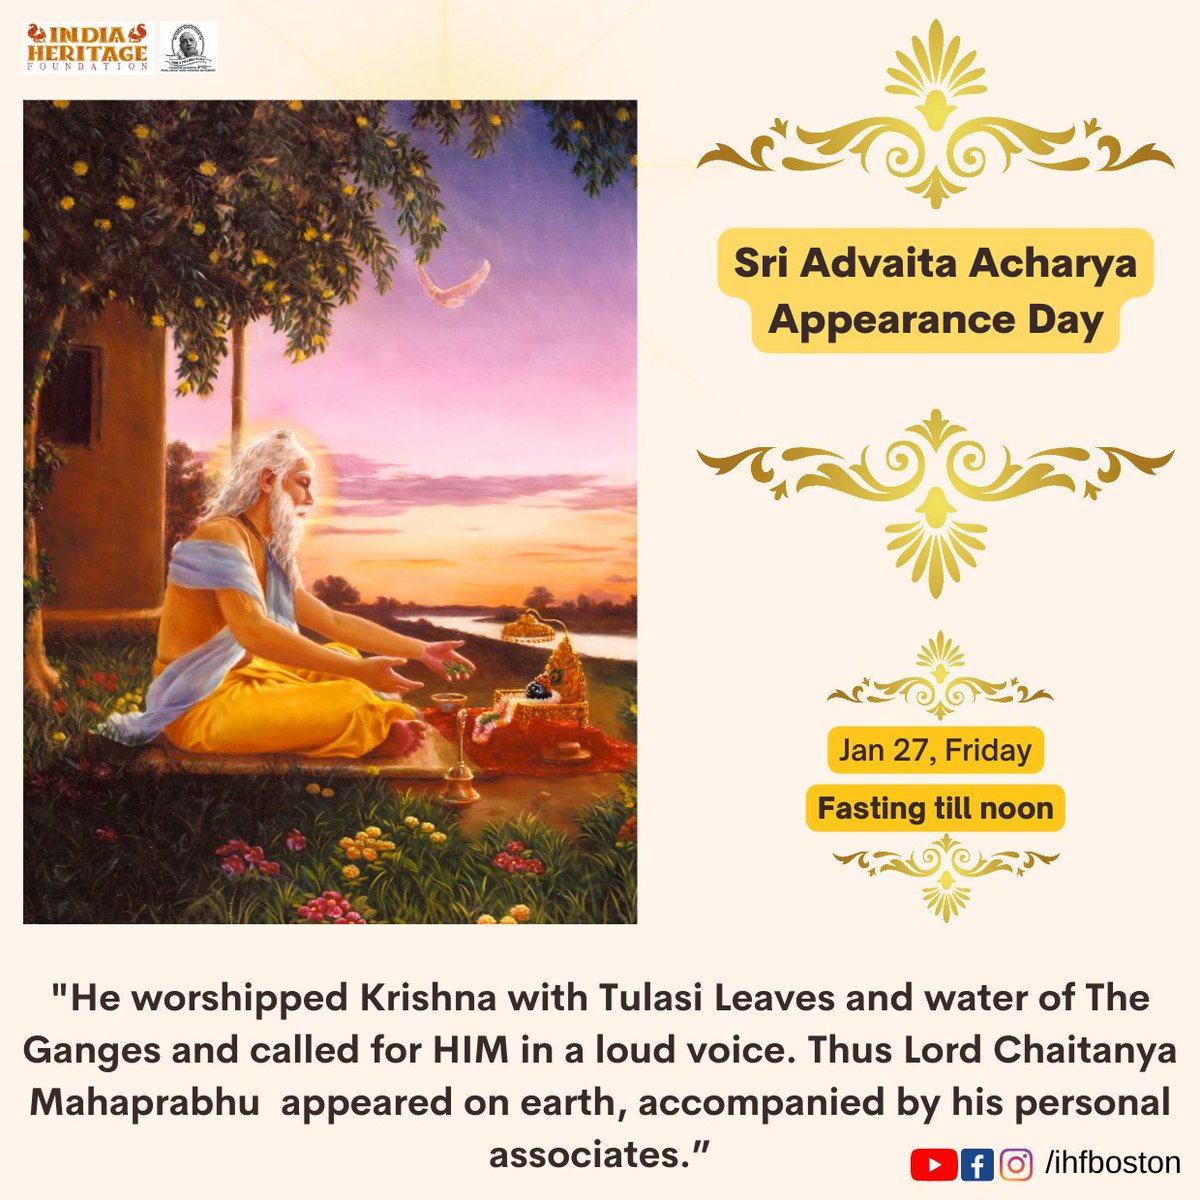 Sri Advaita Acharya Appearance Day 🙏
#harekrishna #advaitaacharya #appearance #iskcon #iskconindia #iskconworld #harekrishna #gaudiyavaishnavism #gaudiya #prabhupada #ihfboston #srilaprabhupada